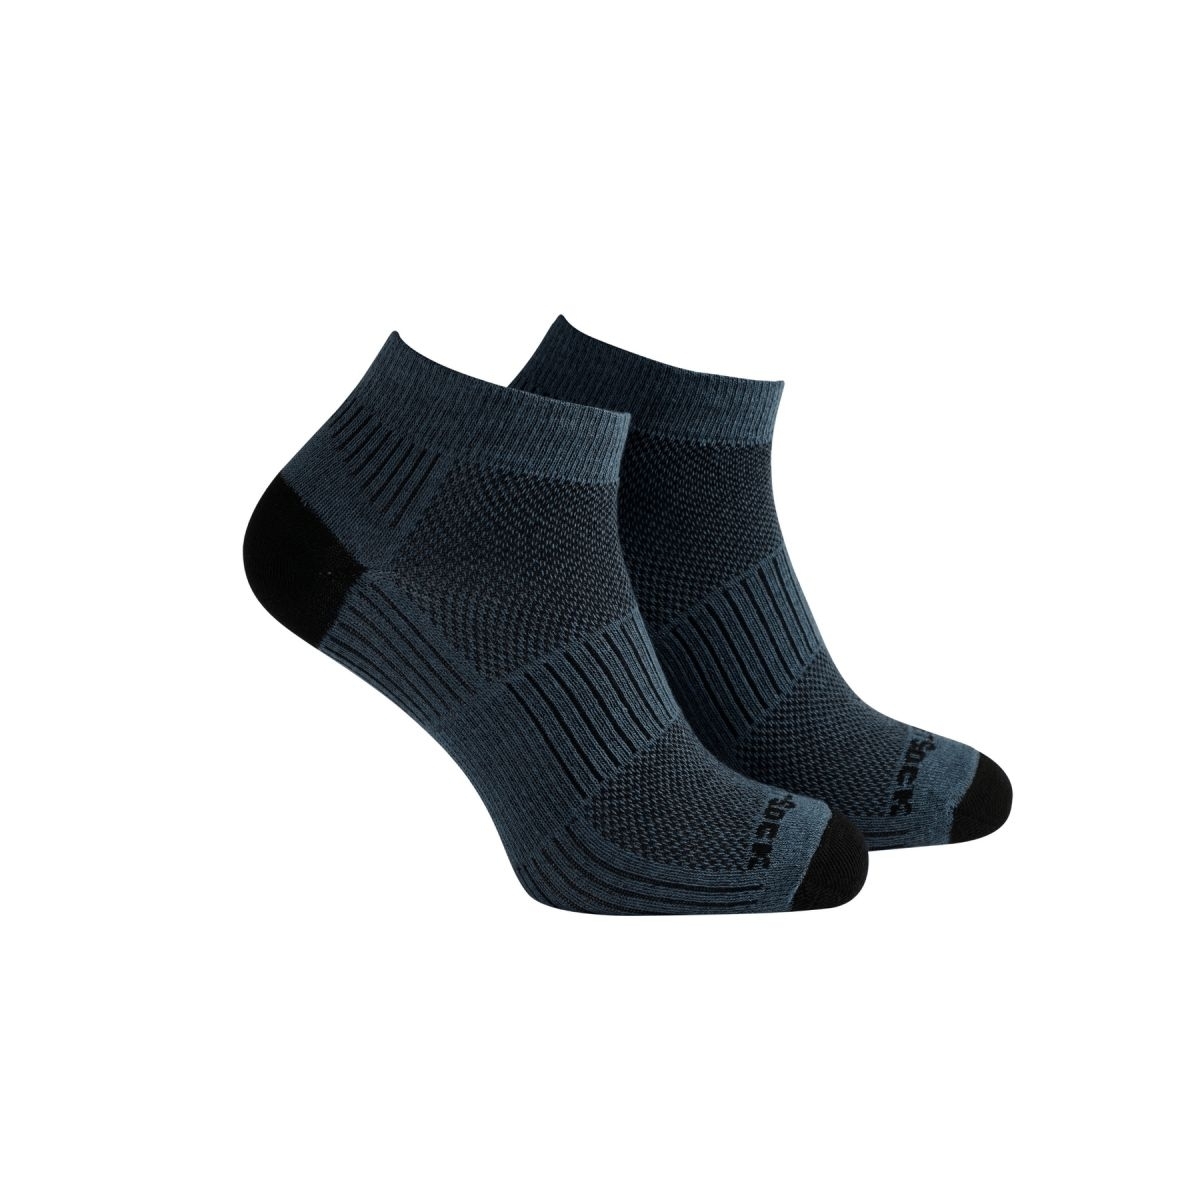 Wrightsock Unisex Coolmesh II Quarter Socks Grey - 805-GRY Grey - Grey, S